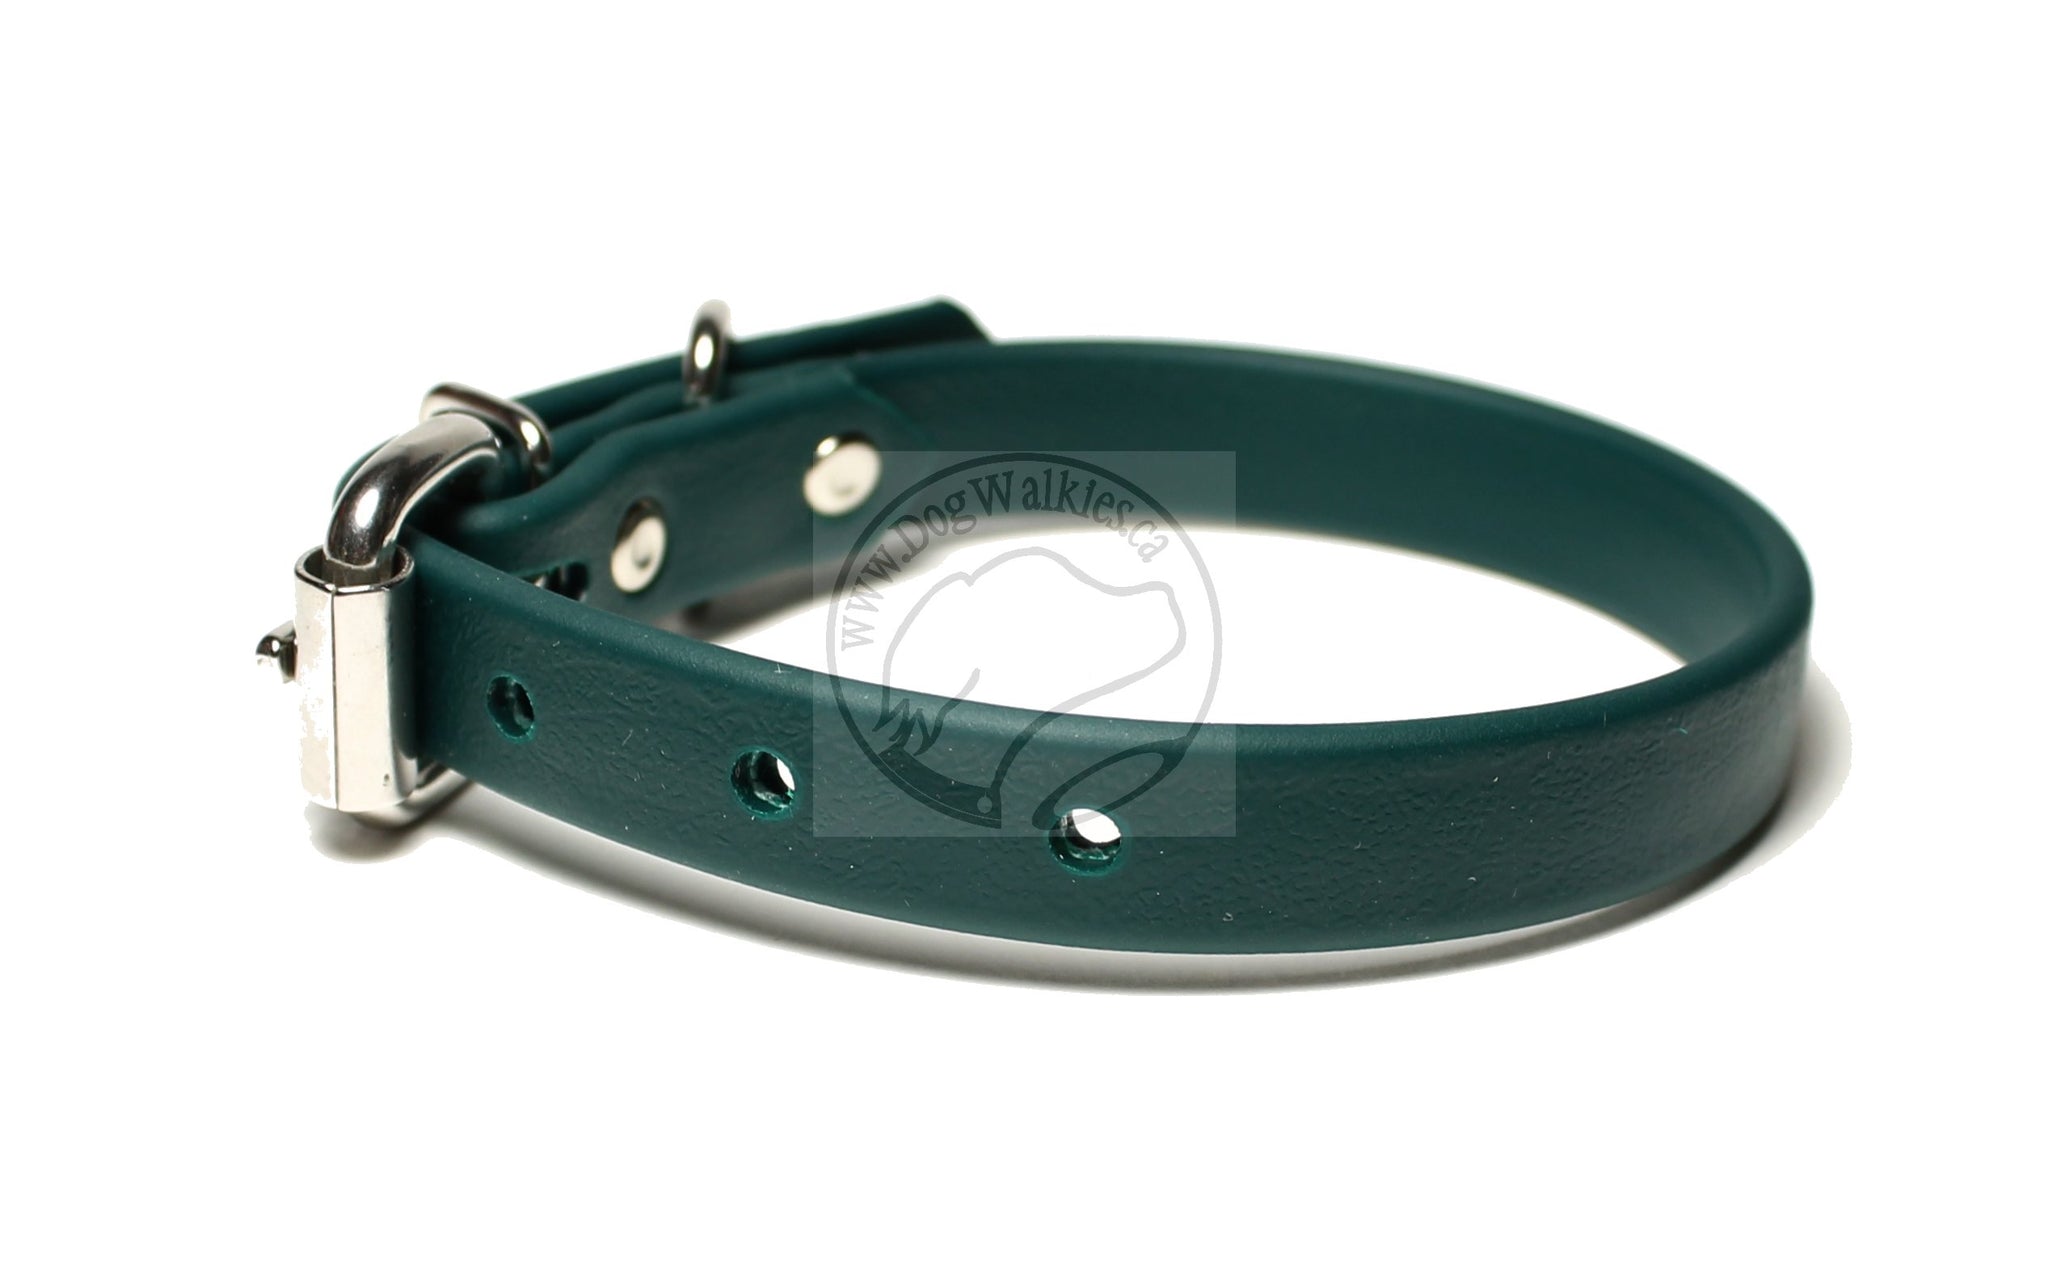 Pine Green Biothane Dog Collar - 5/8"(16mm) wide